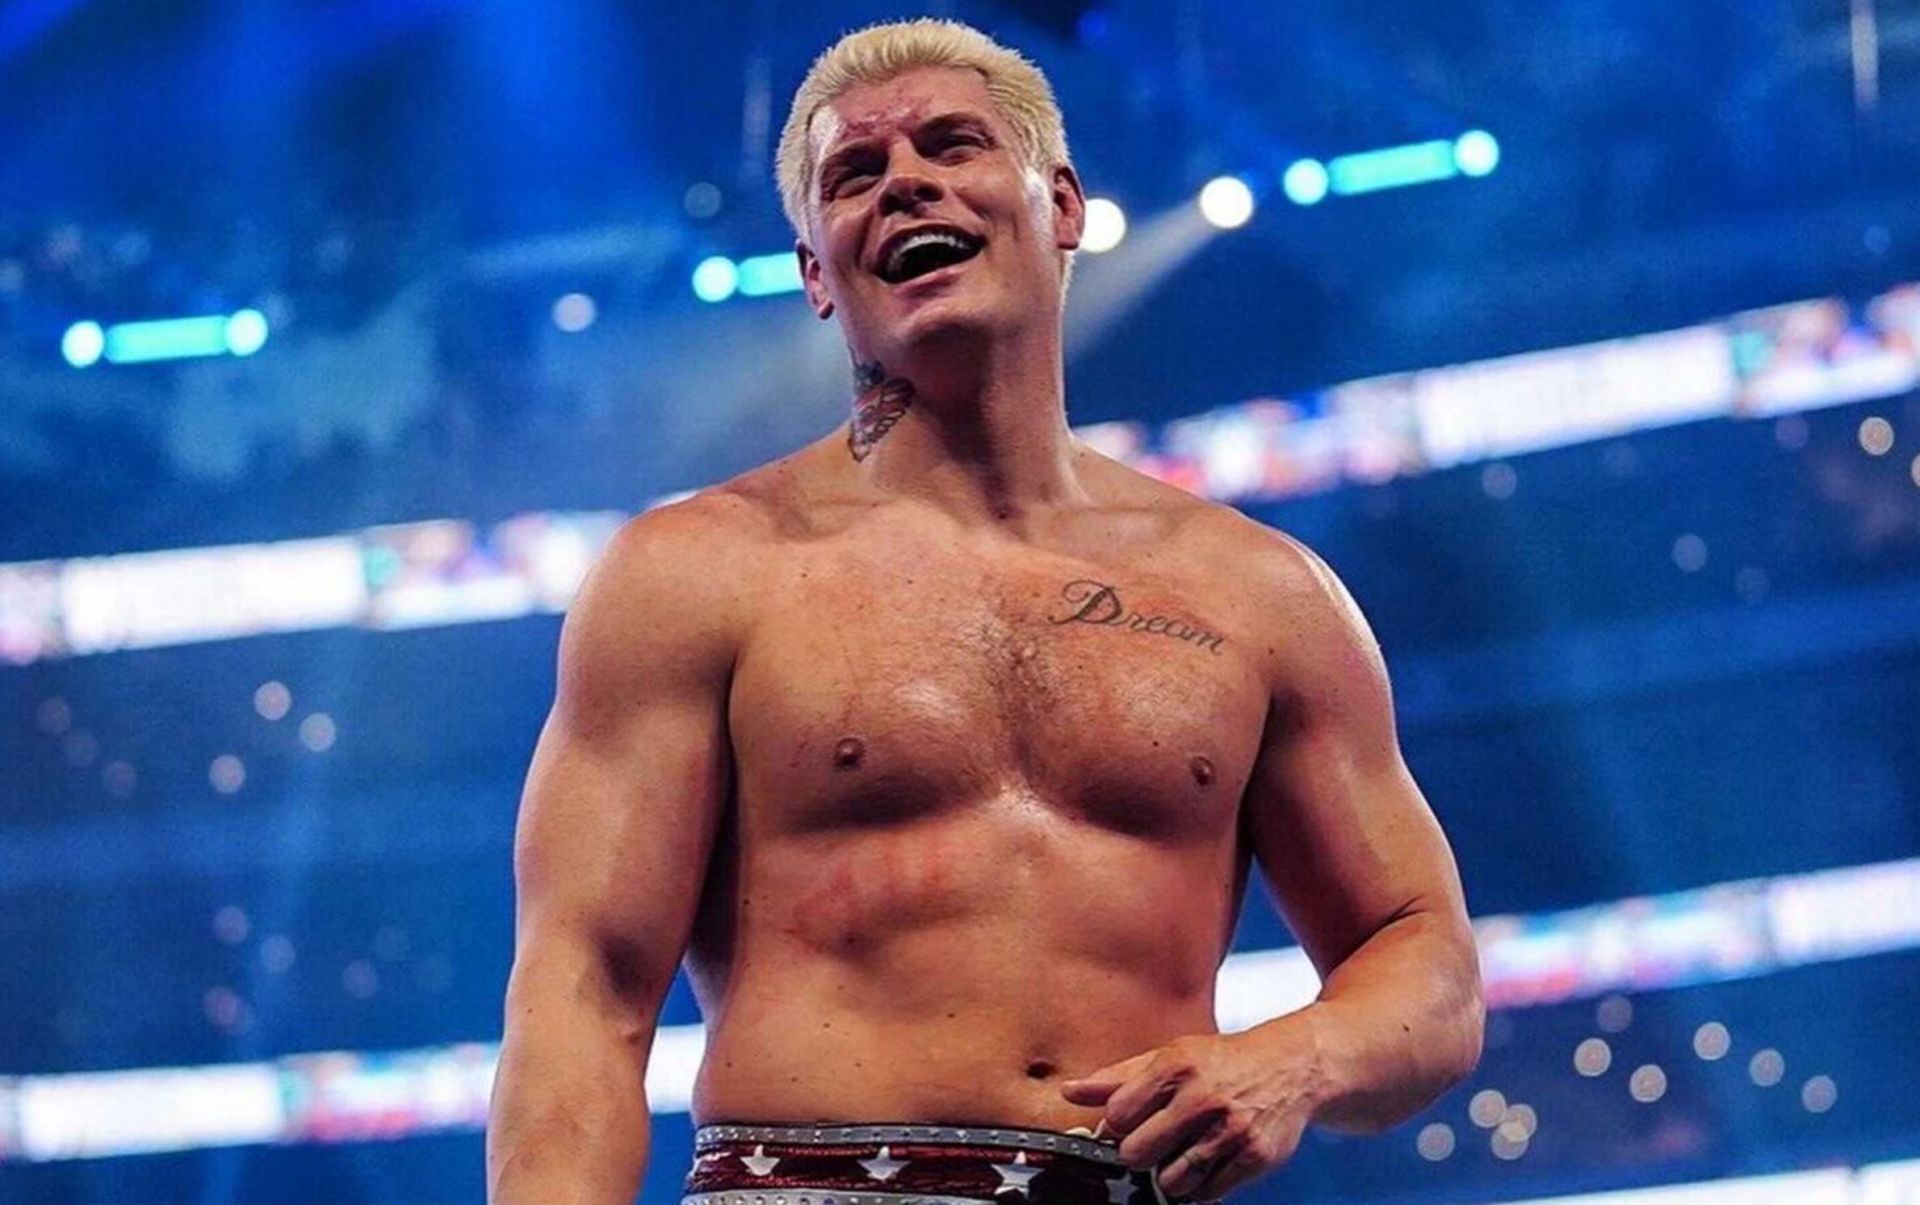 Cody Rhodes made a triumphant return to WWE.